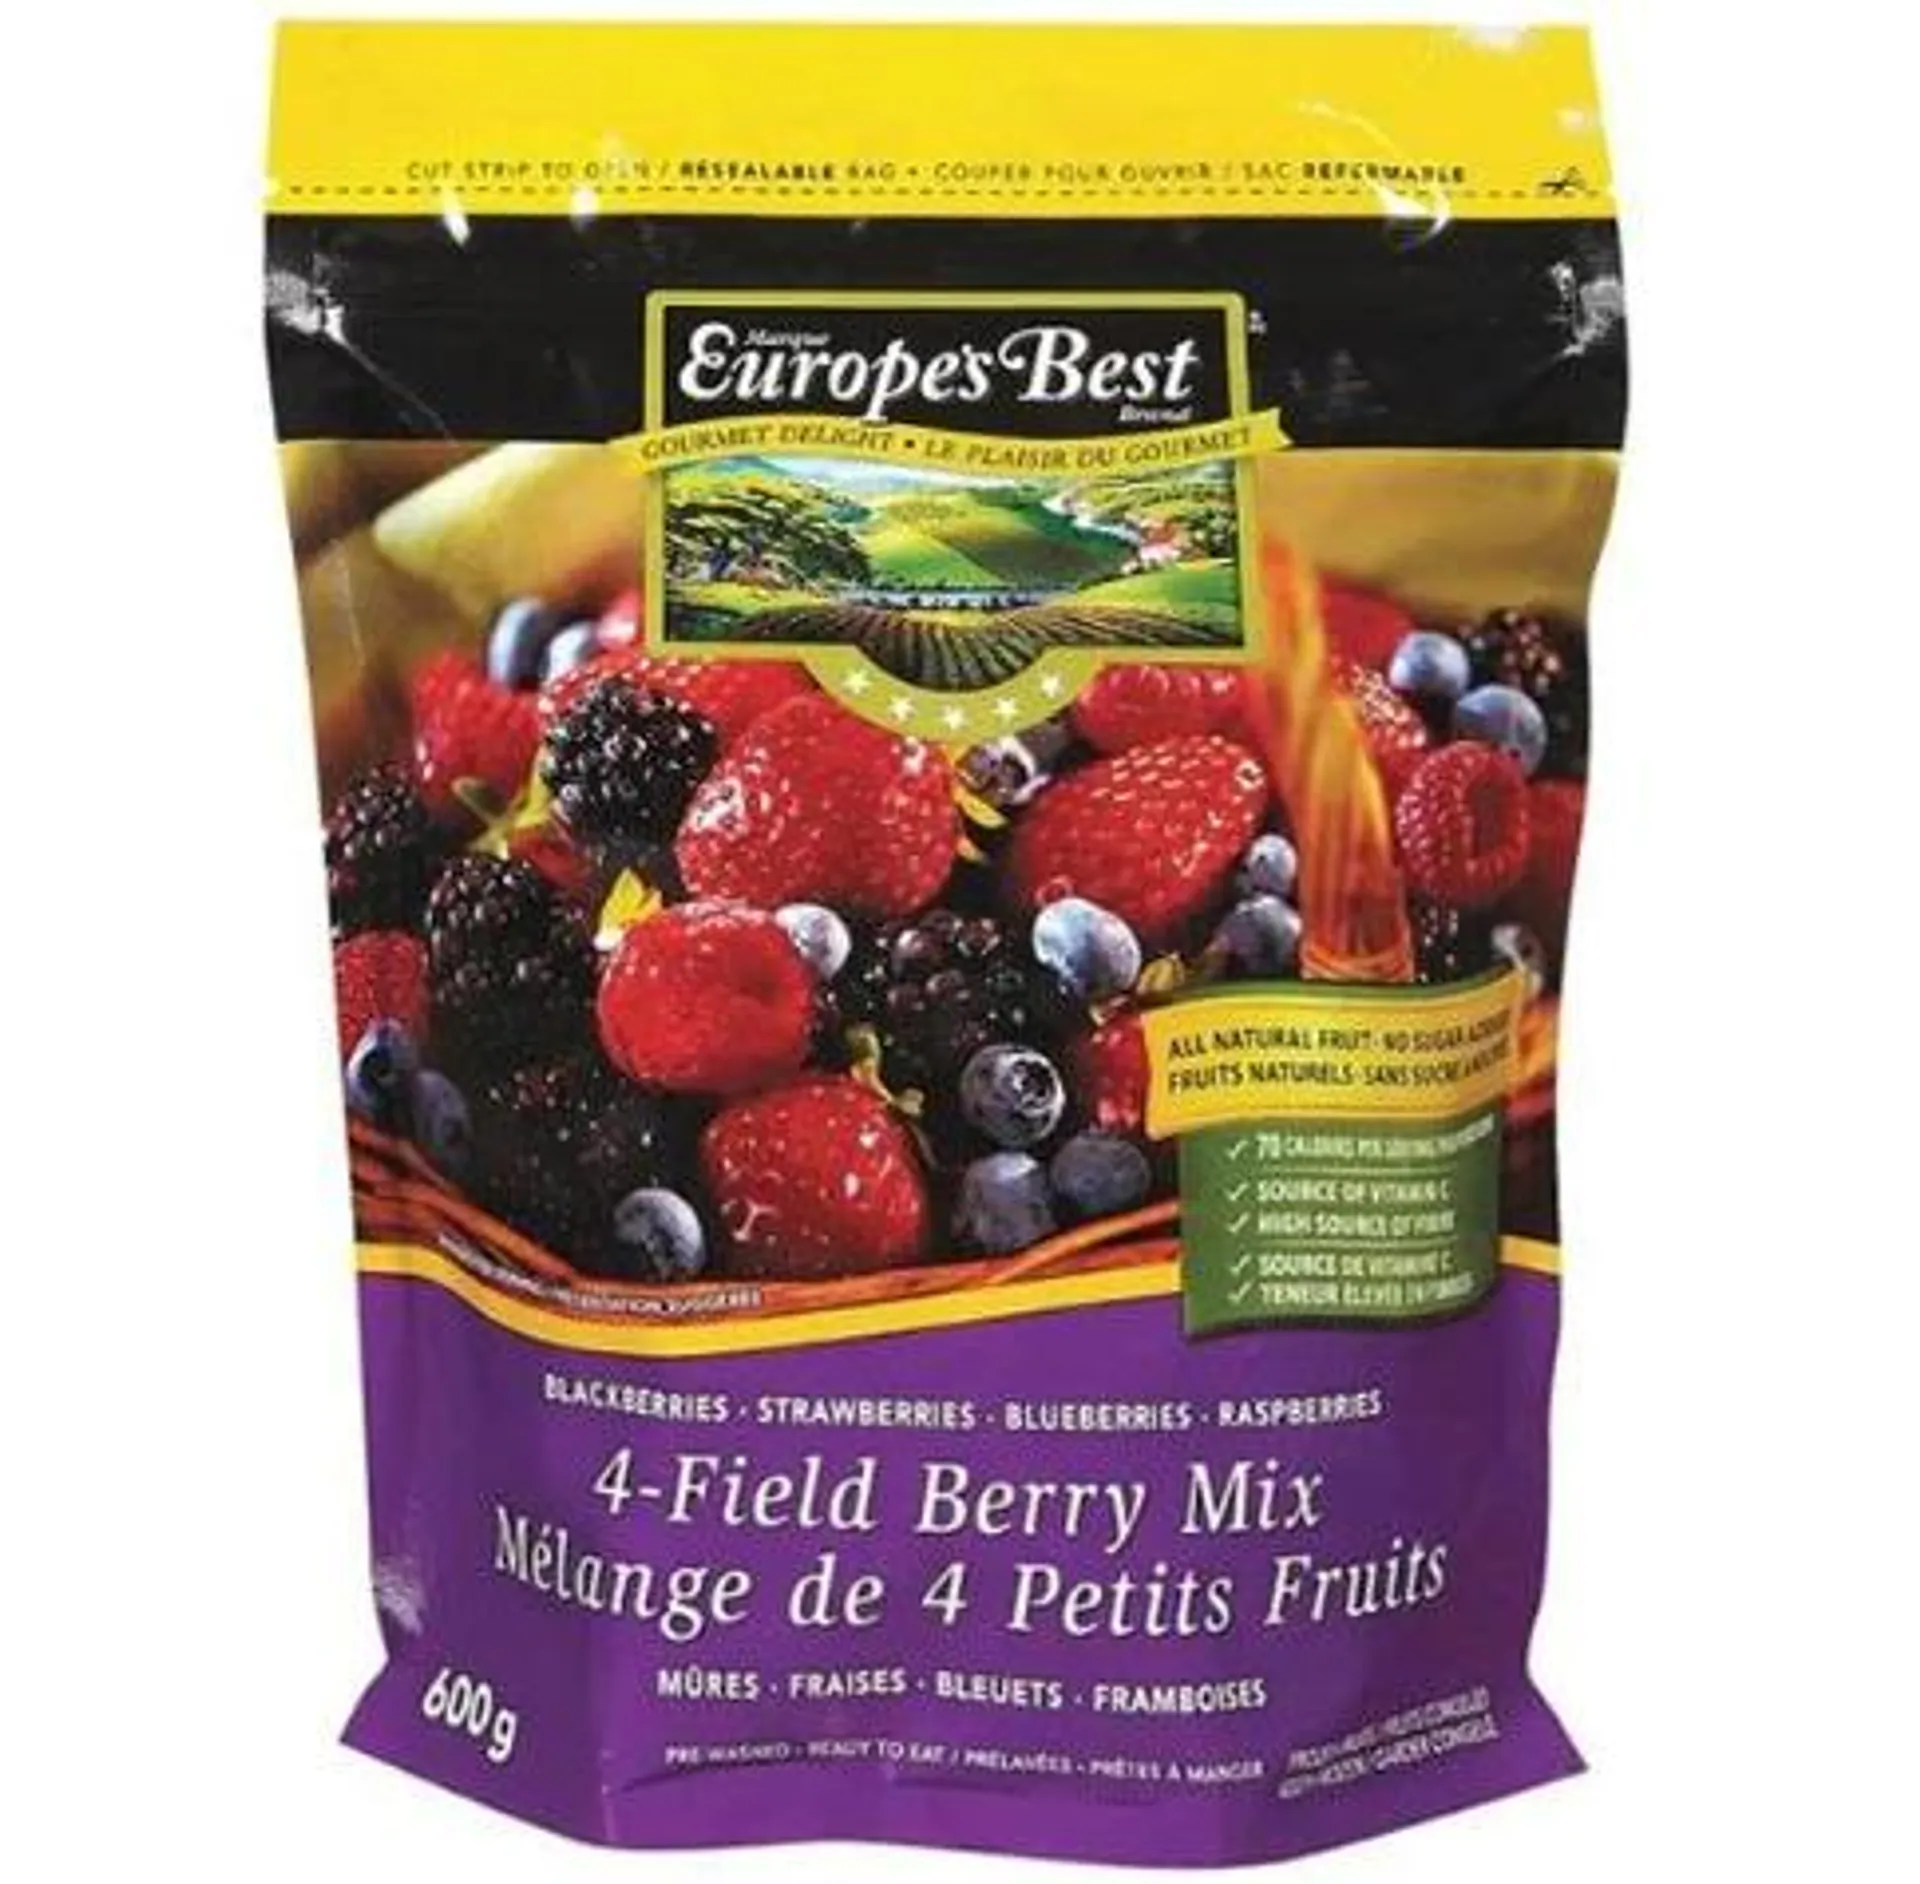 Europe'sBest field berry mix - 600g